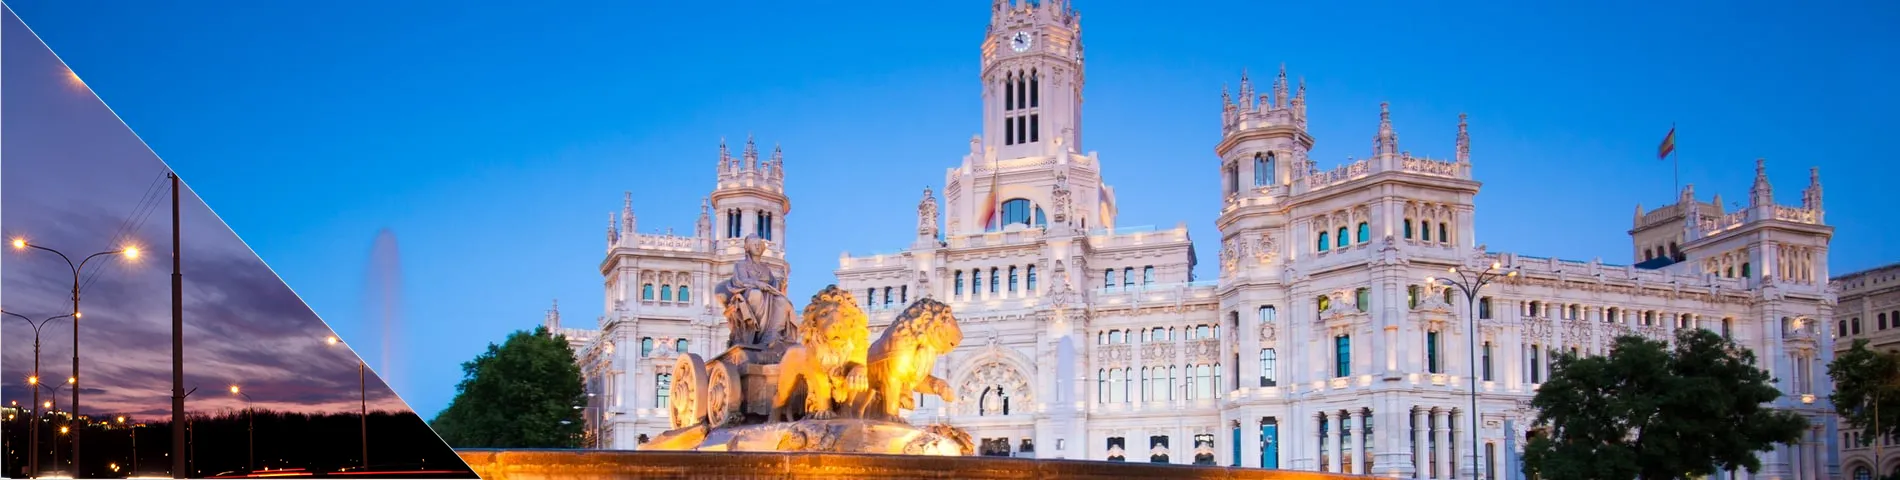 Madrid - Evening Course